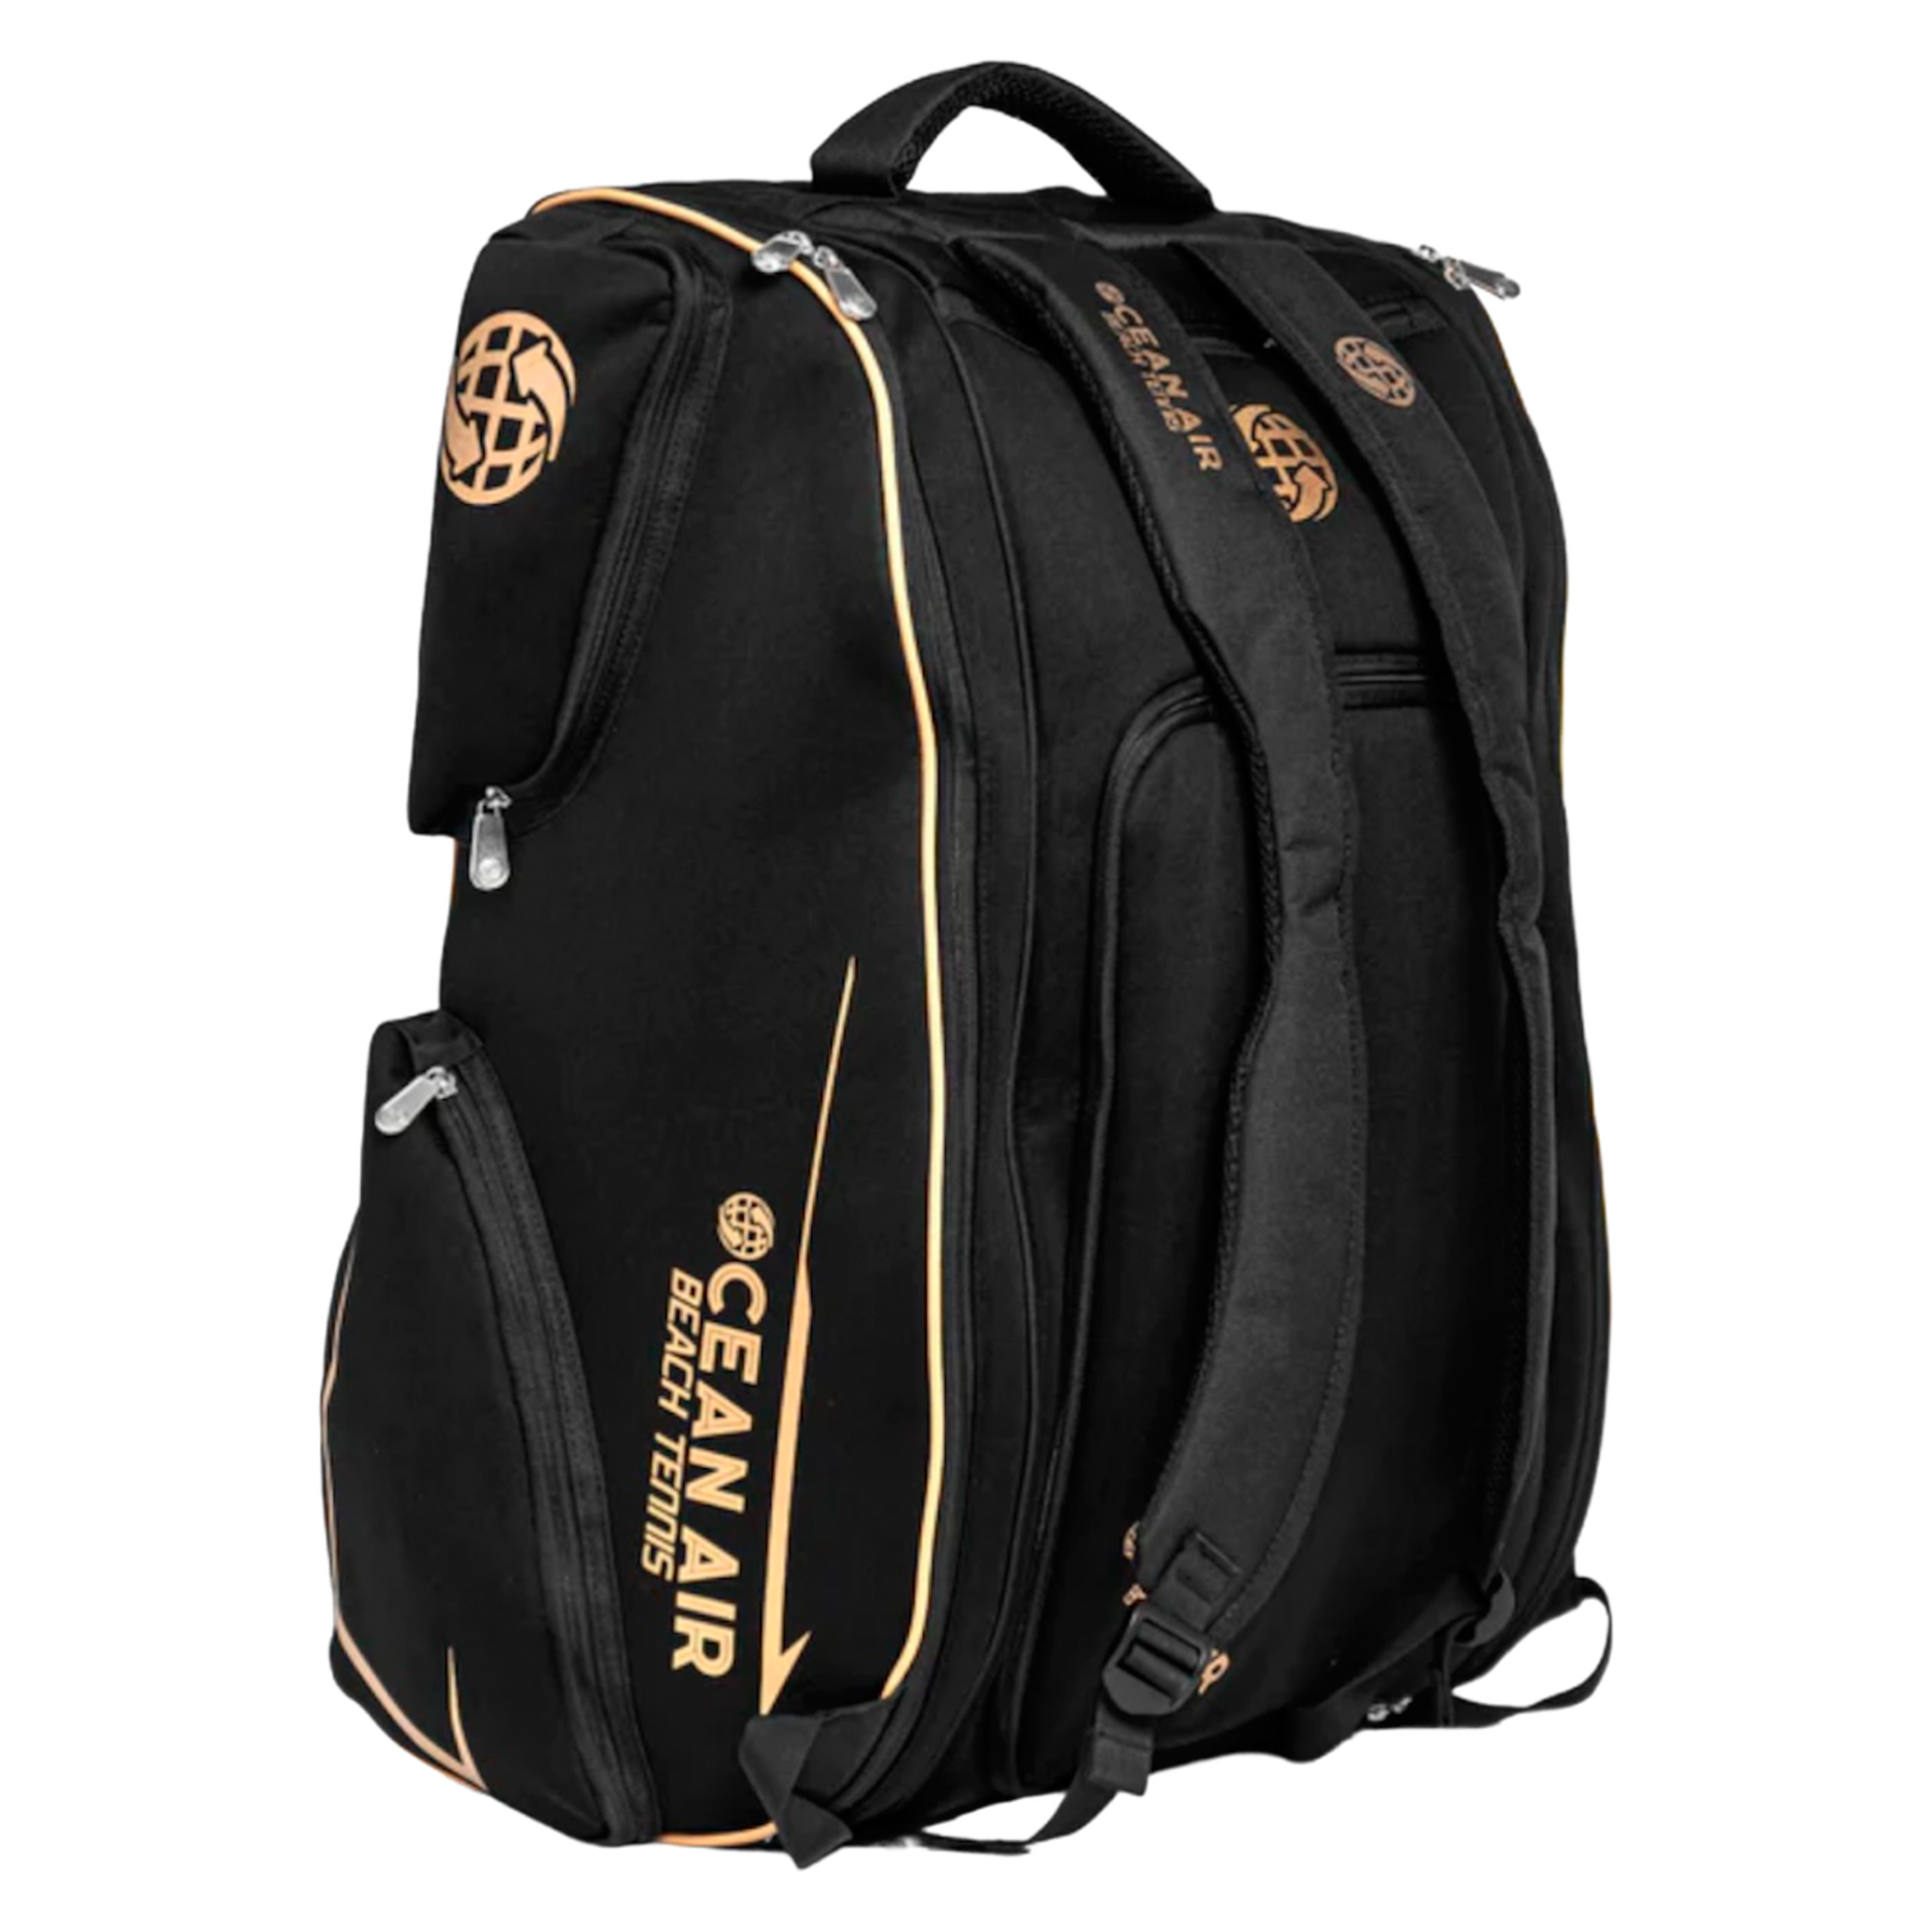 Ocean Air Pro BT Travel Bag Black/Gold